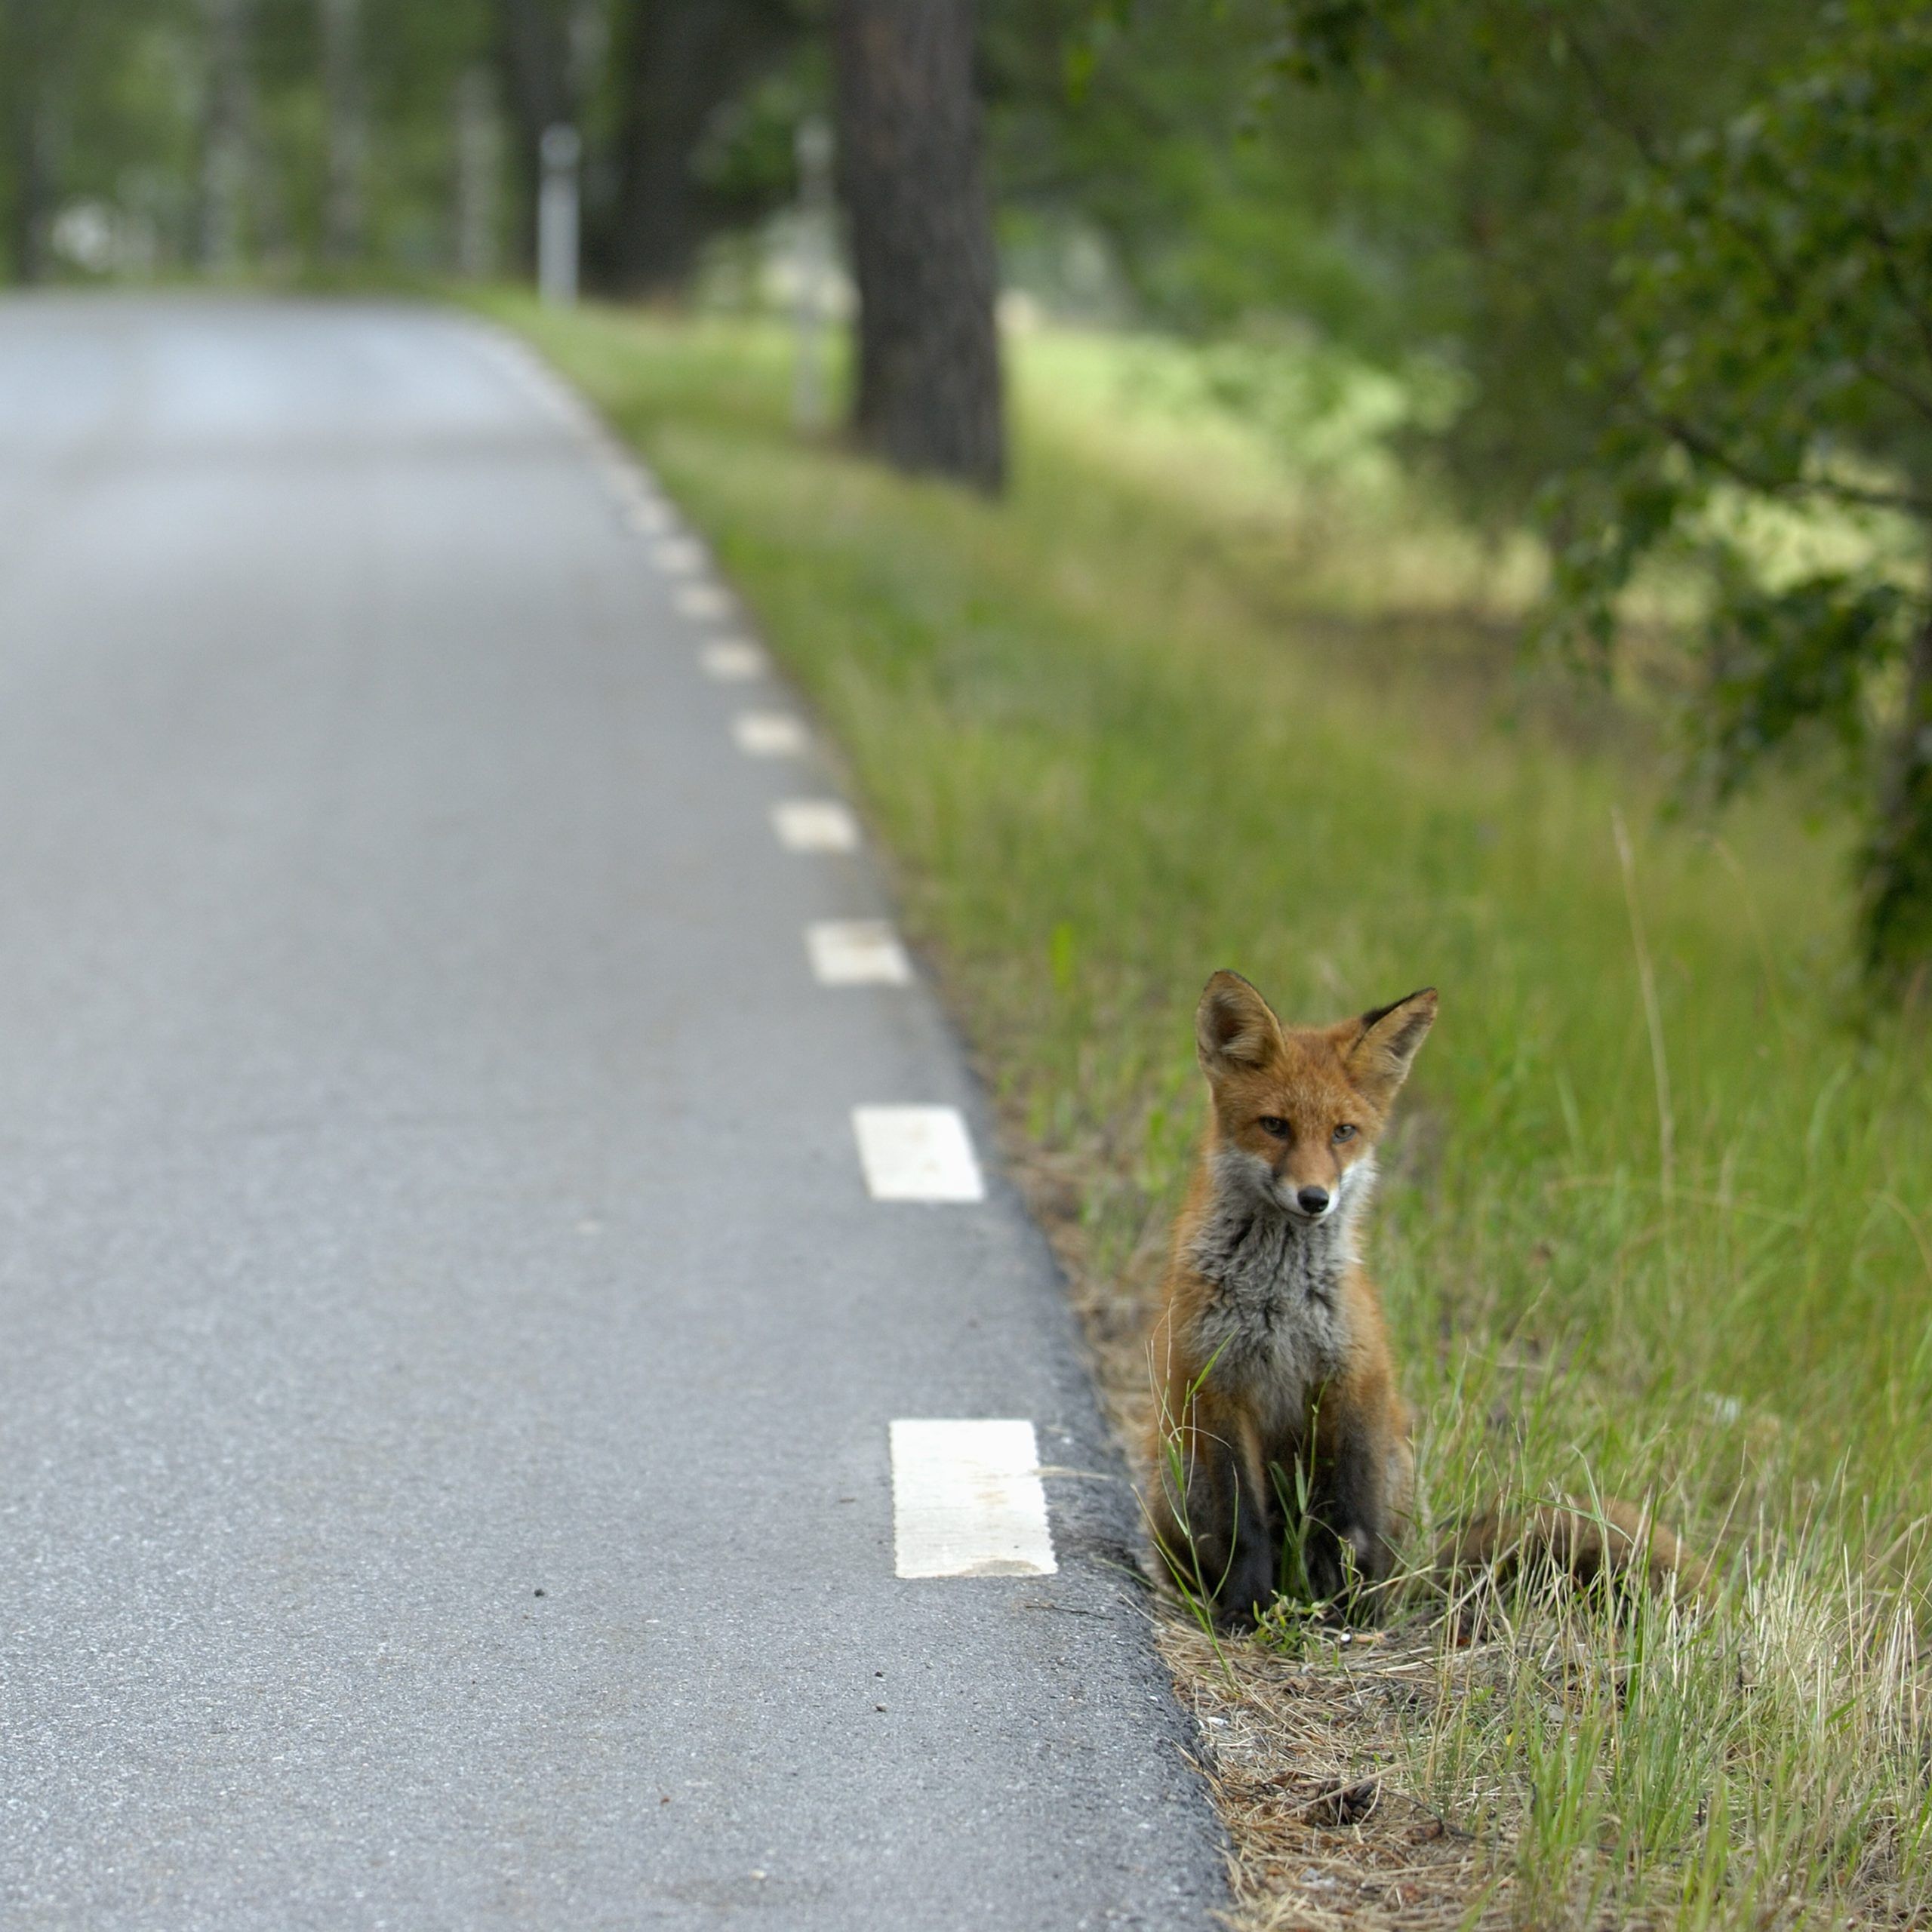 Take part in Mammals on Roads